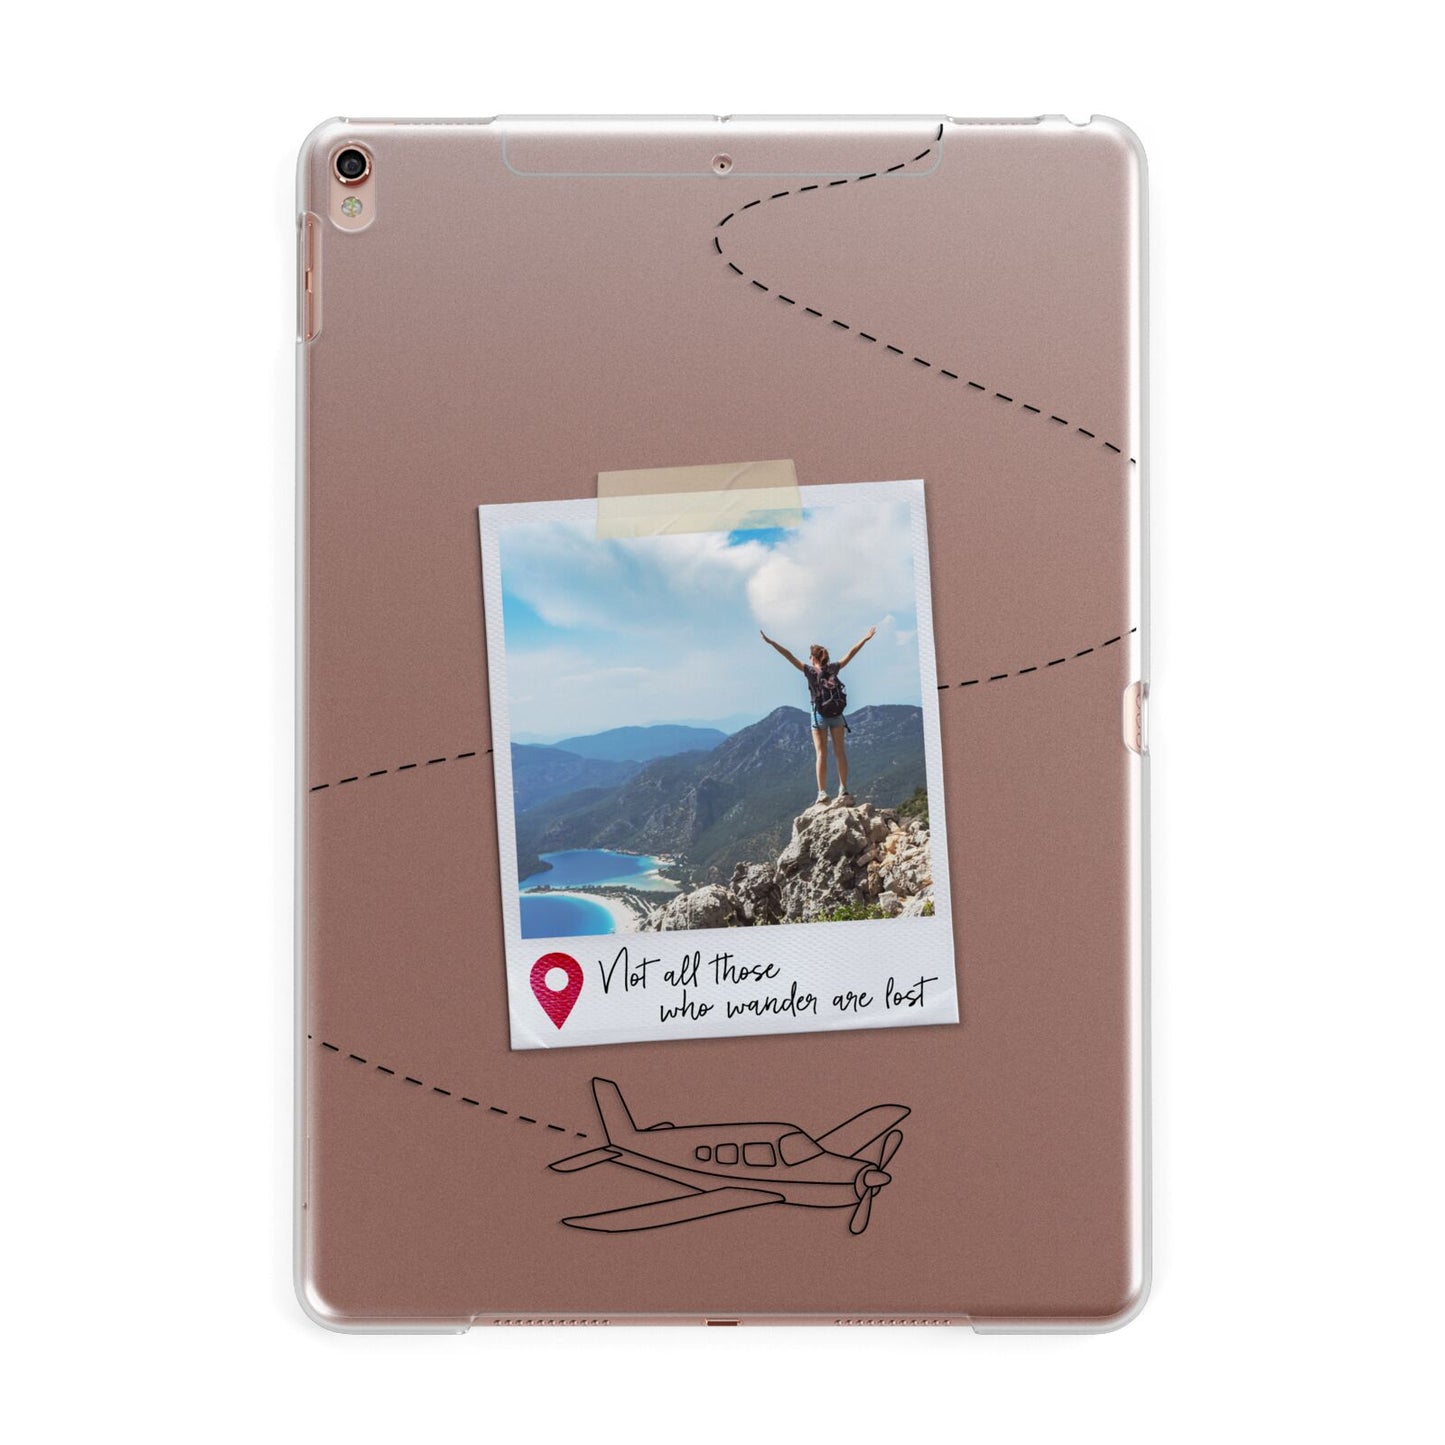 Backpacker Photo Upload Personalised Apple iPad Rose Gold Case